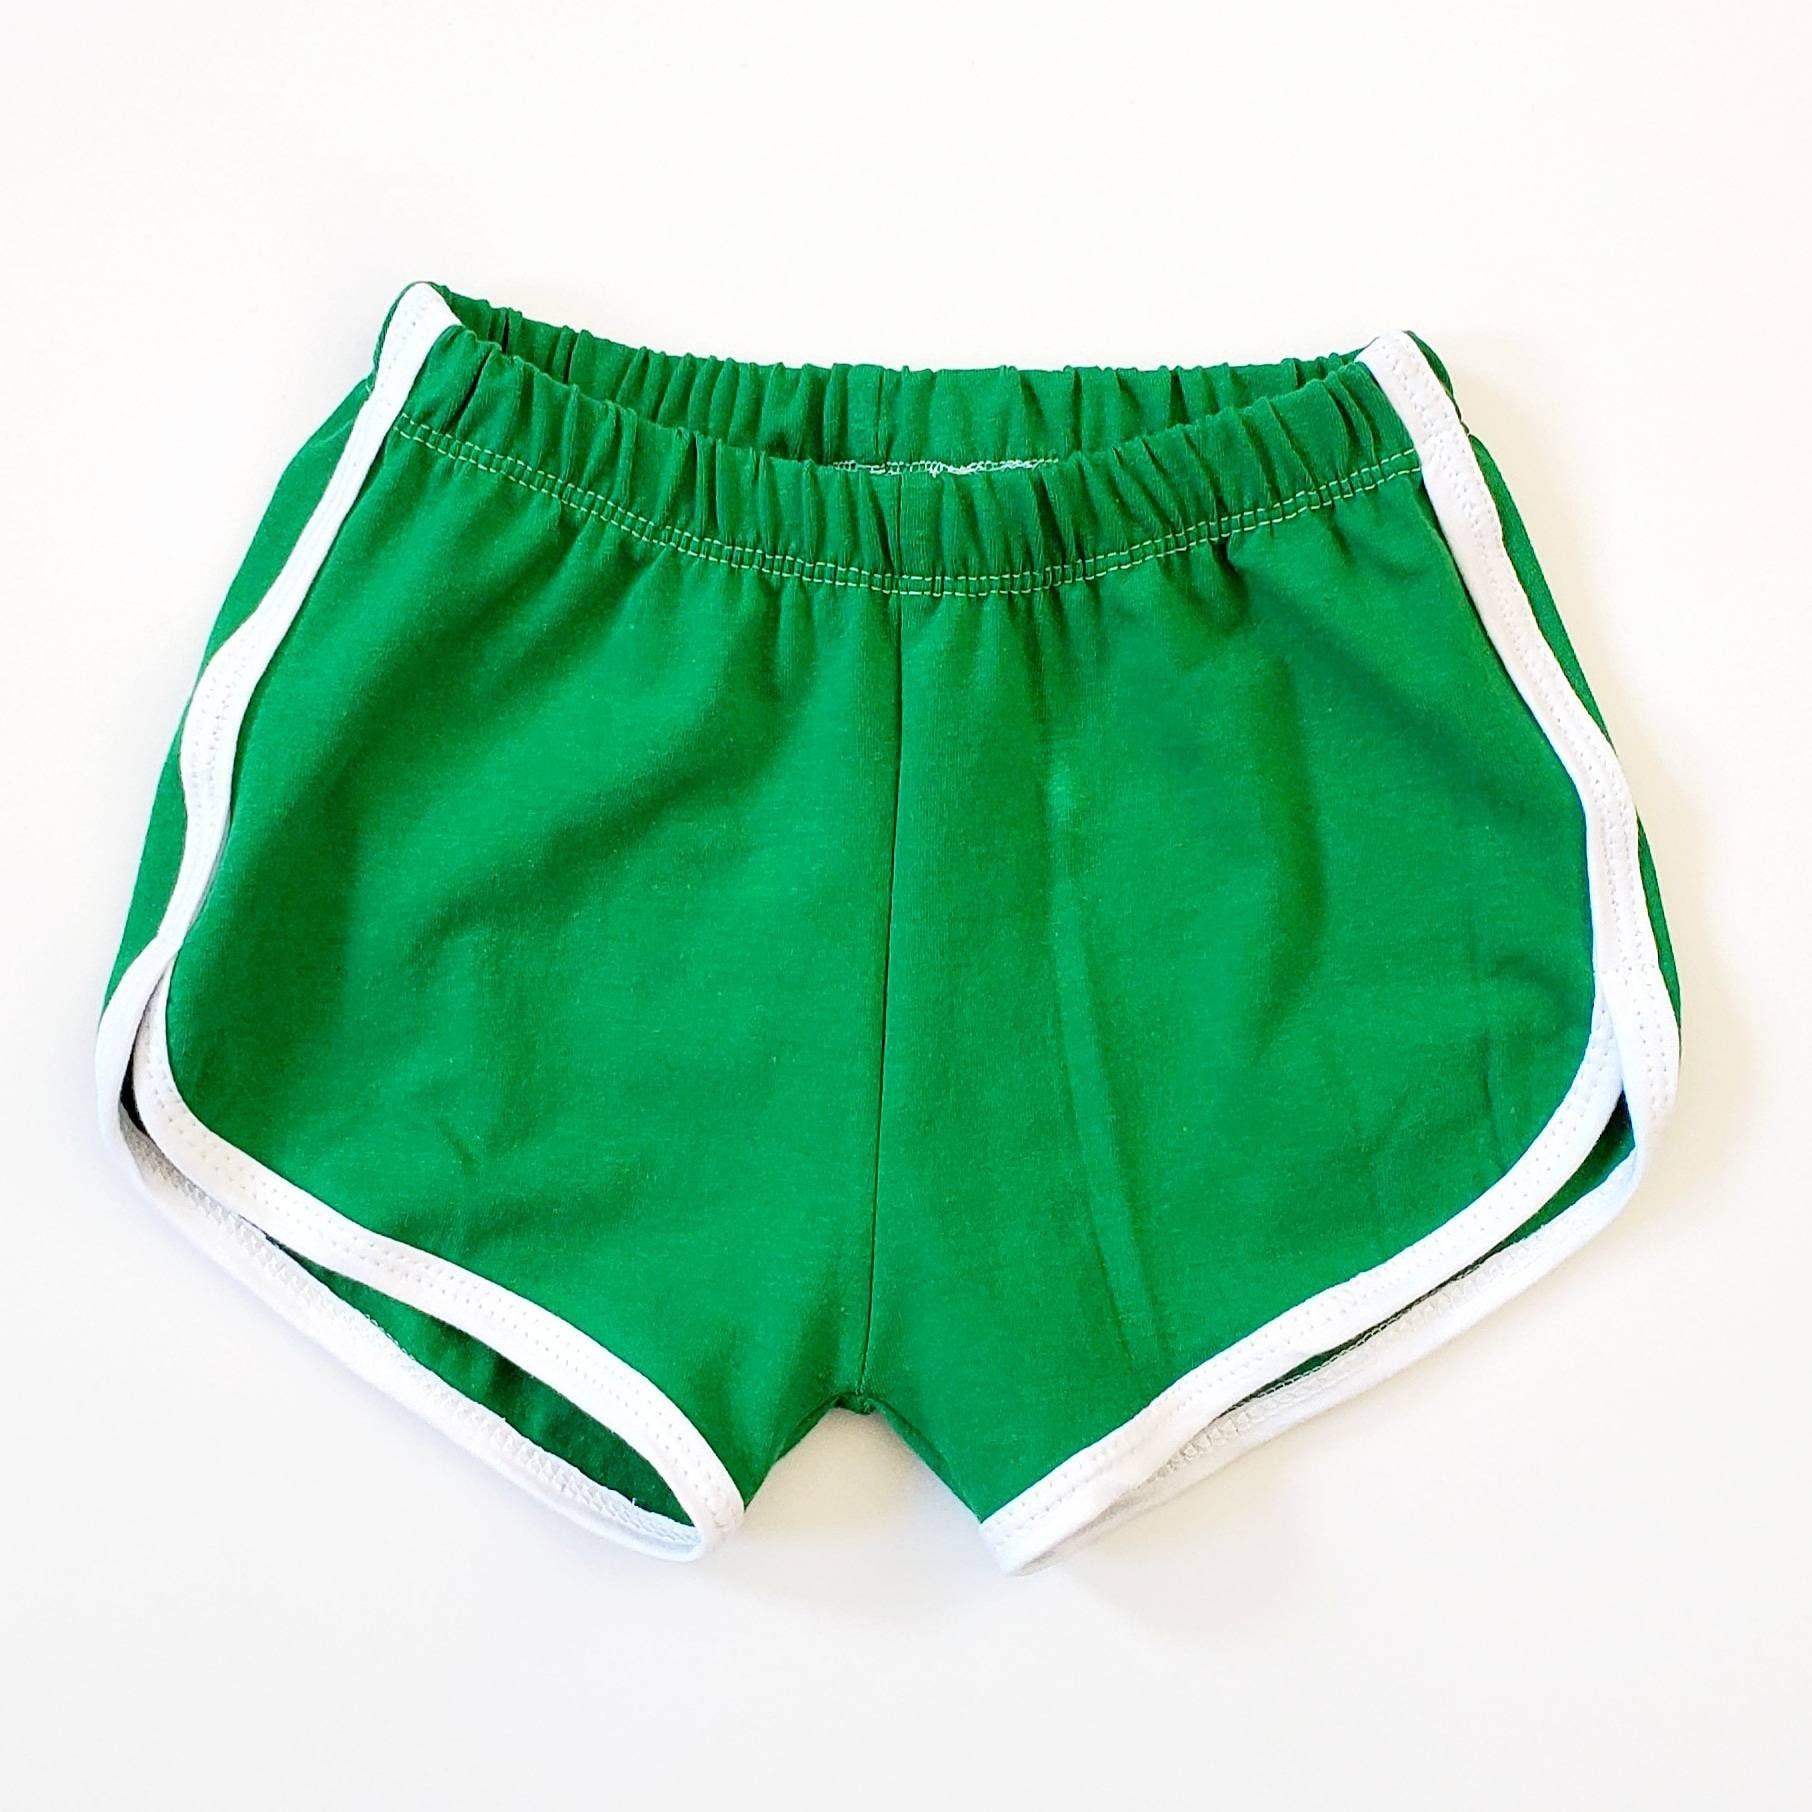 Green Track Shorts, Retro Kids Shorts, Baby Toddler Dolphin Shorts